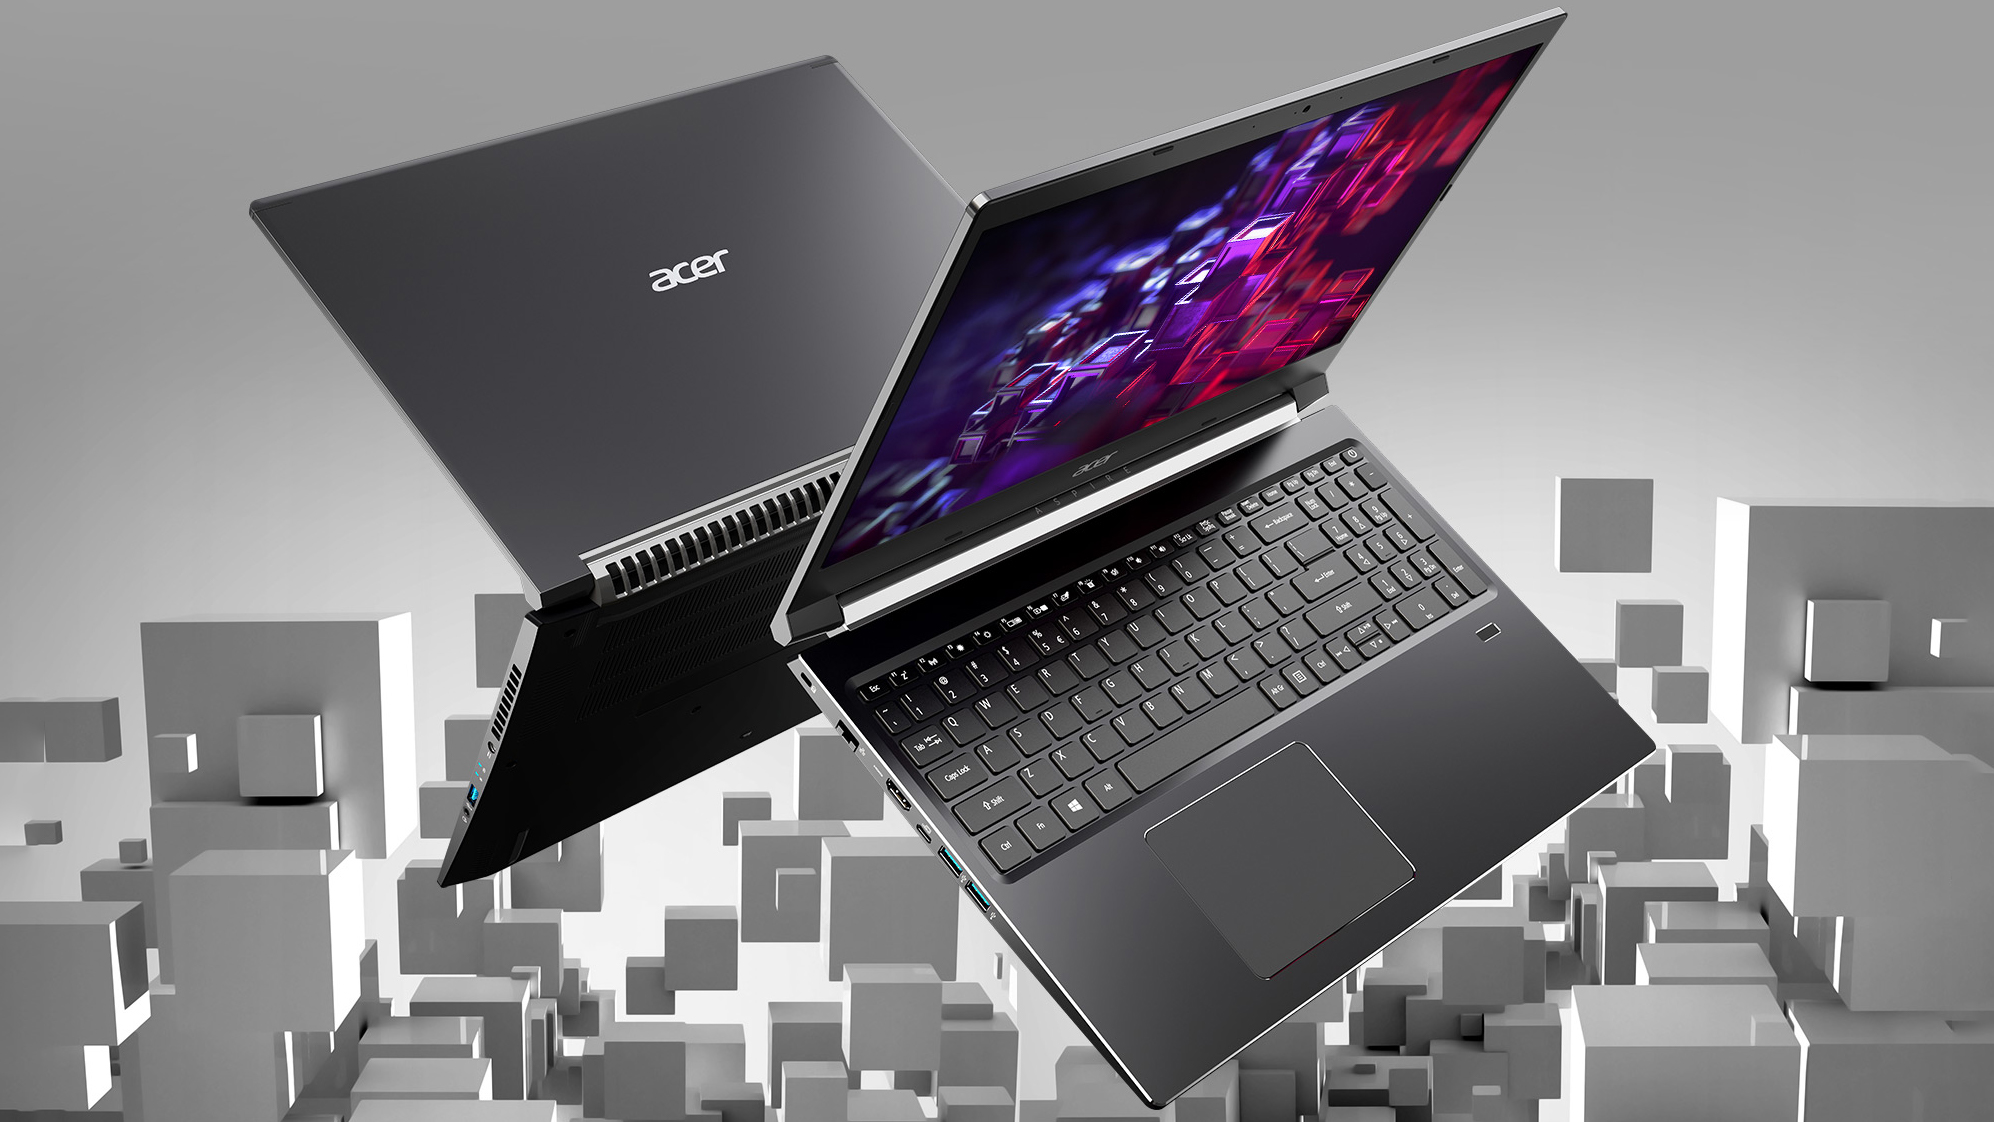 2019 Acer Nitro 5 15.6 FHD Gaming Laptop - Quad-core Intel i5-8300H, 16GB  DDR4, NVIDIA GeForce GTX 1050 Ti with 4GB GDDR5, 256GB PCIe SSD, 1TB HDD